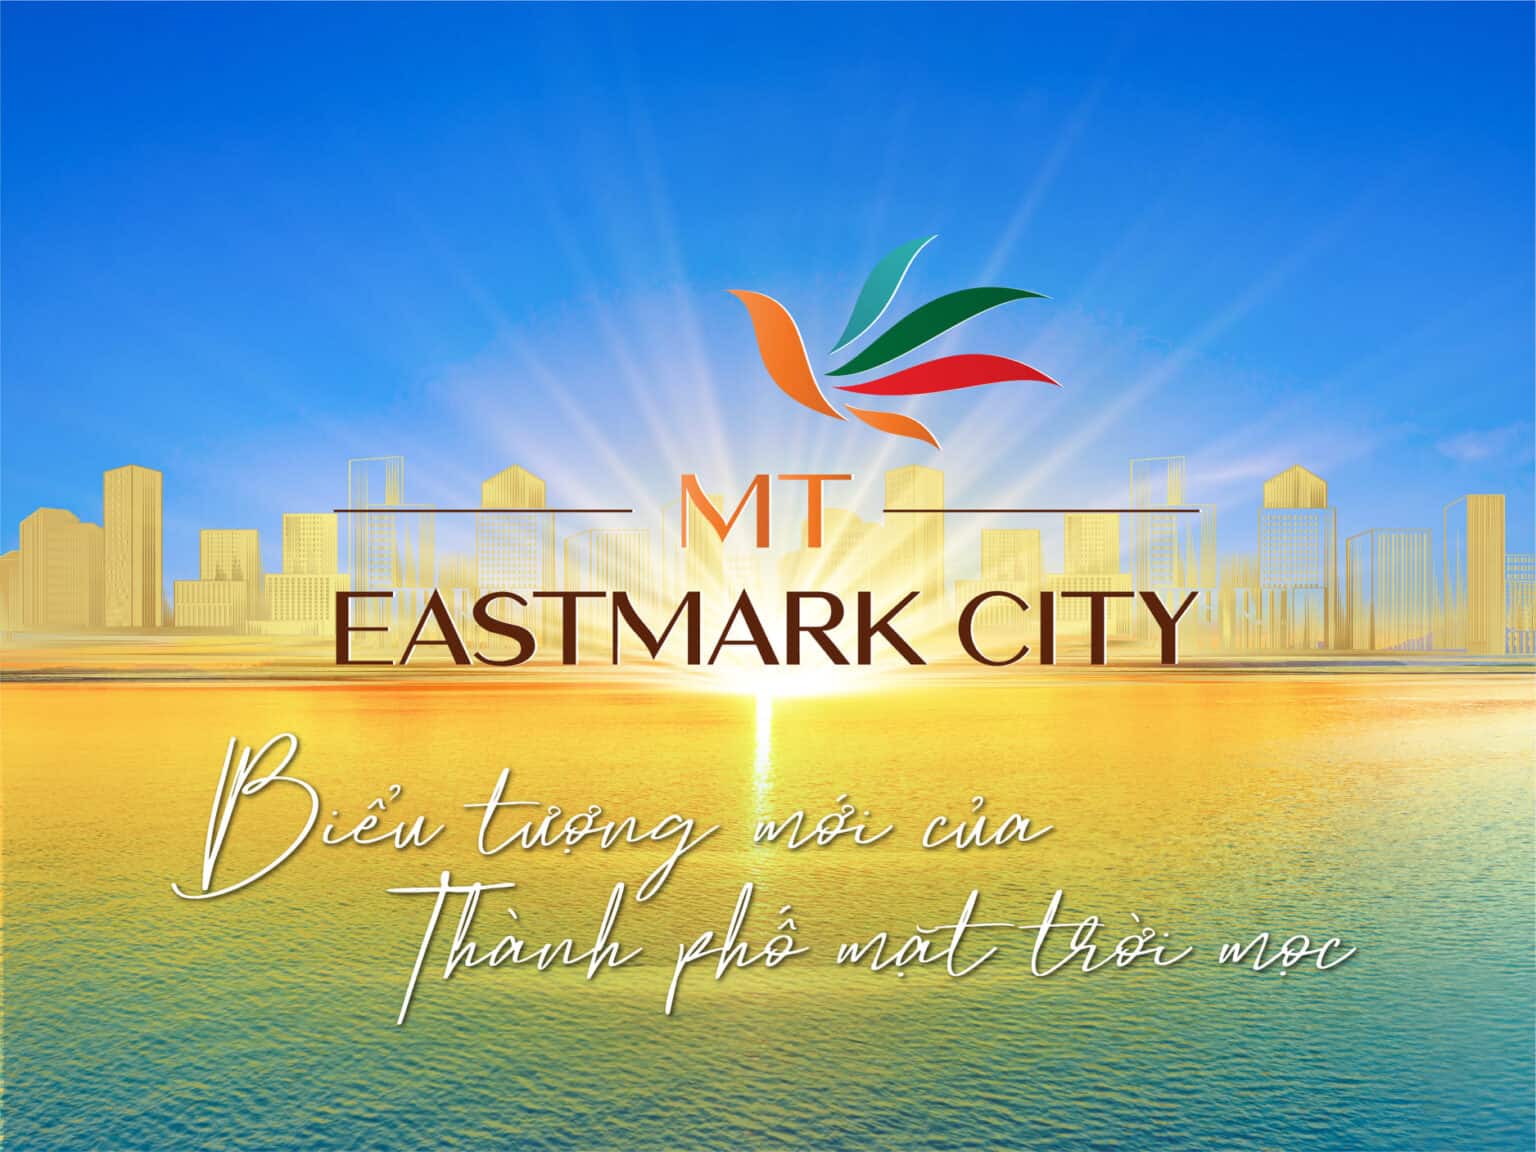 MT EASTMARK CITY